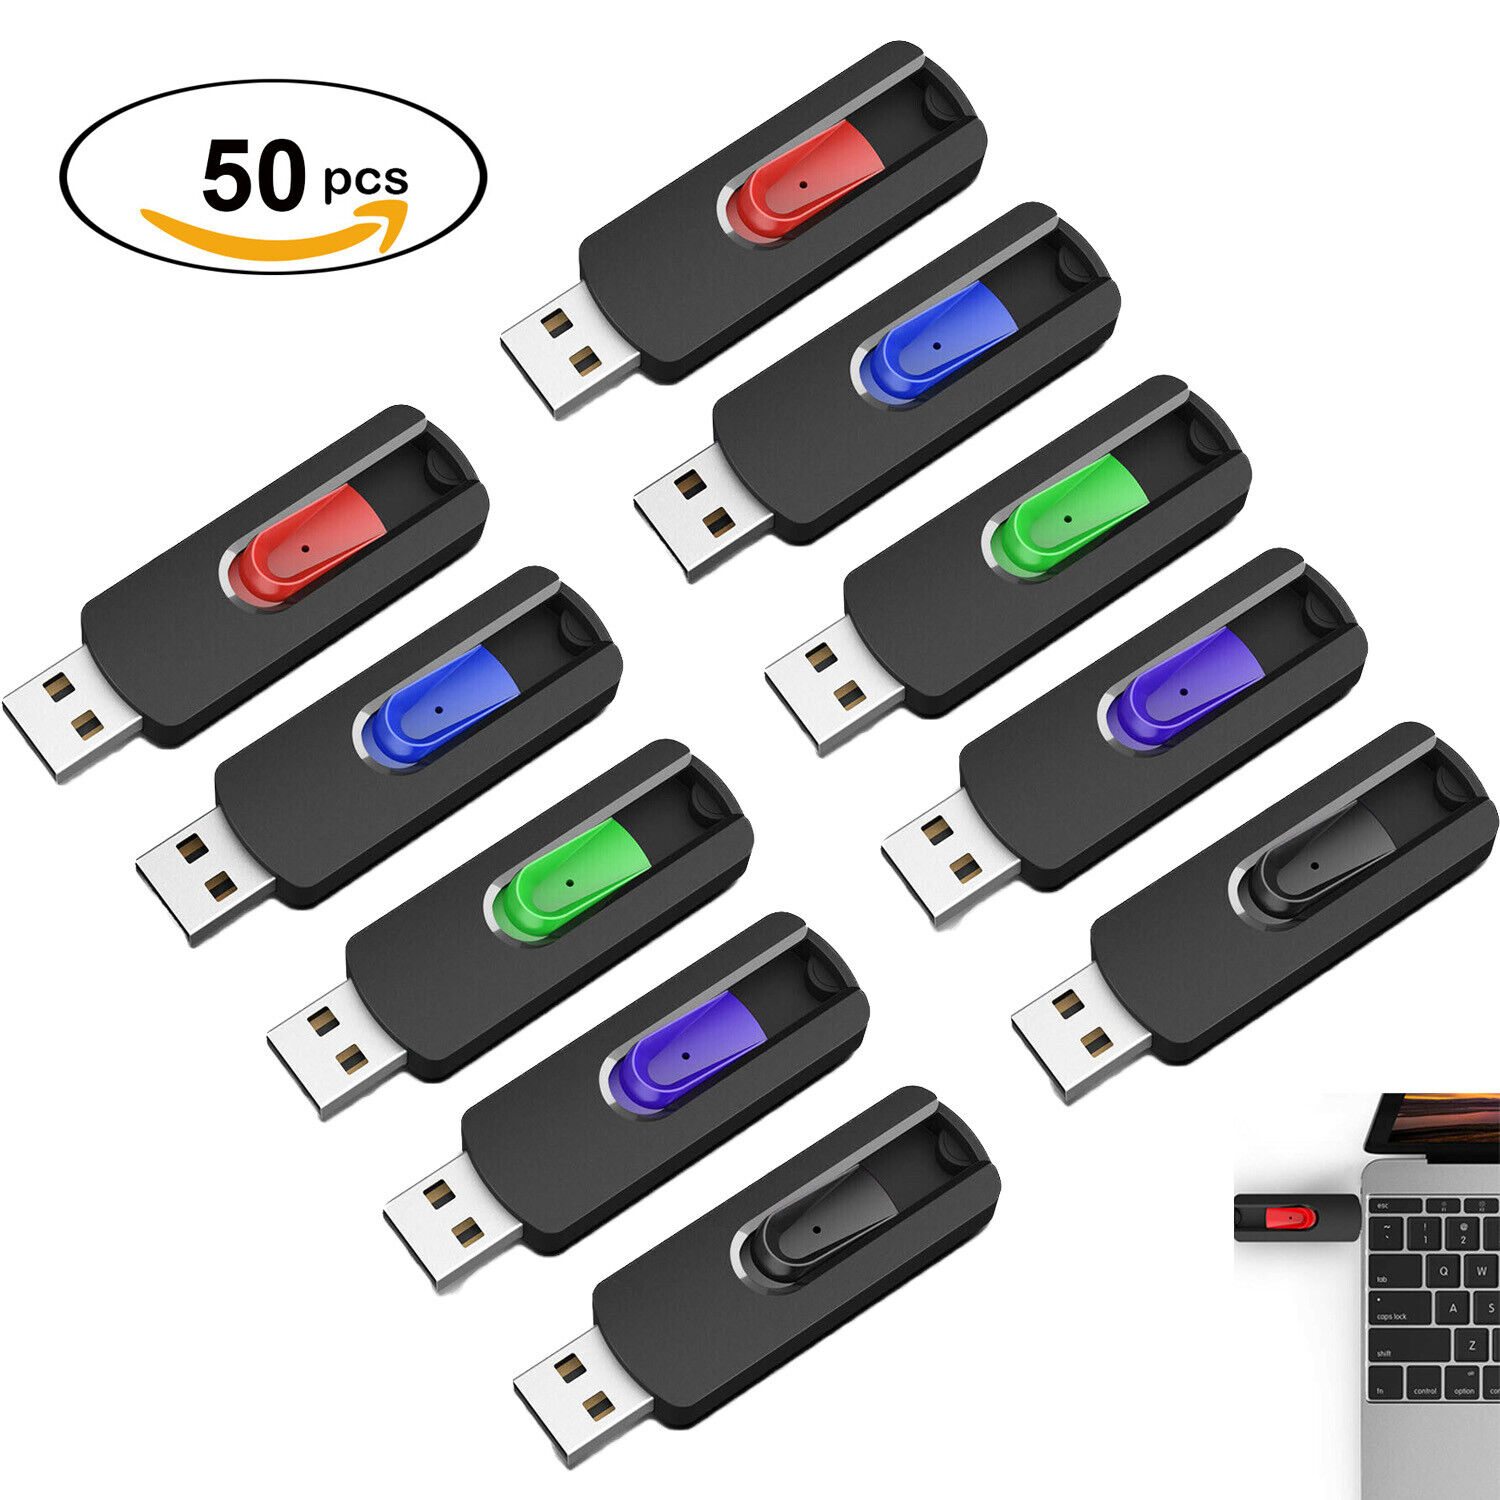 50PCS/Lot Flash Drive Memory Stick Data Storage Pen Drive 16GB 32GB 64GB Memory